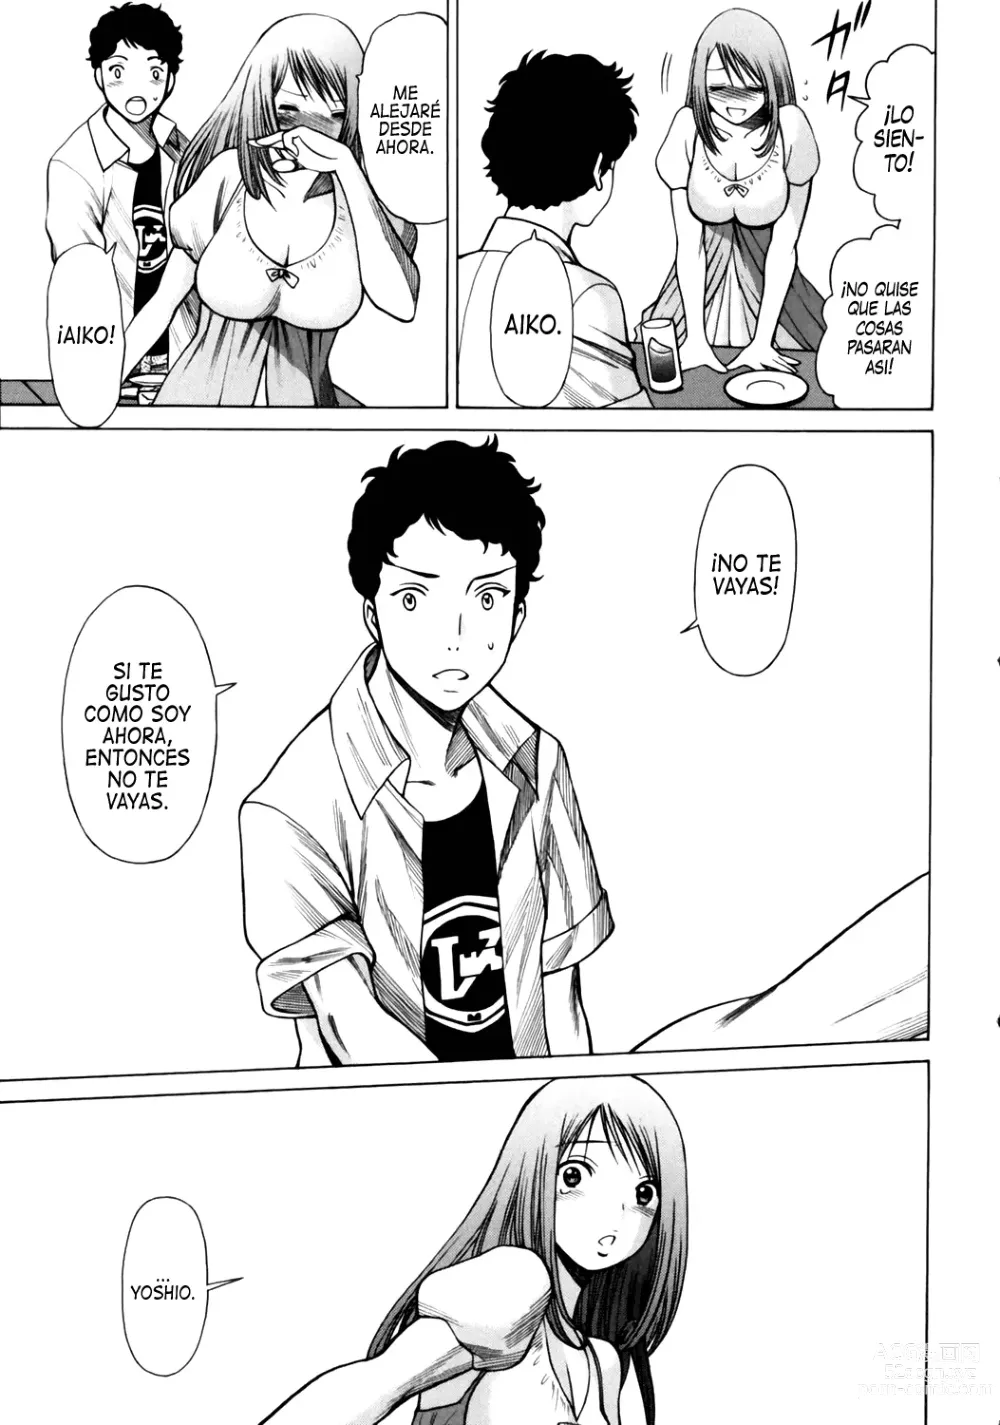 Page 217 of manga Narikiri Lovers